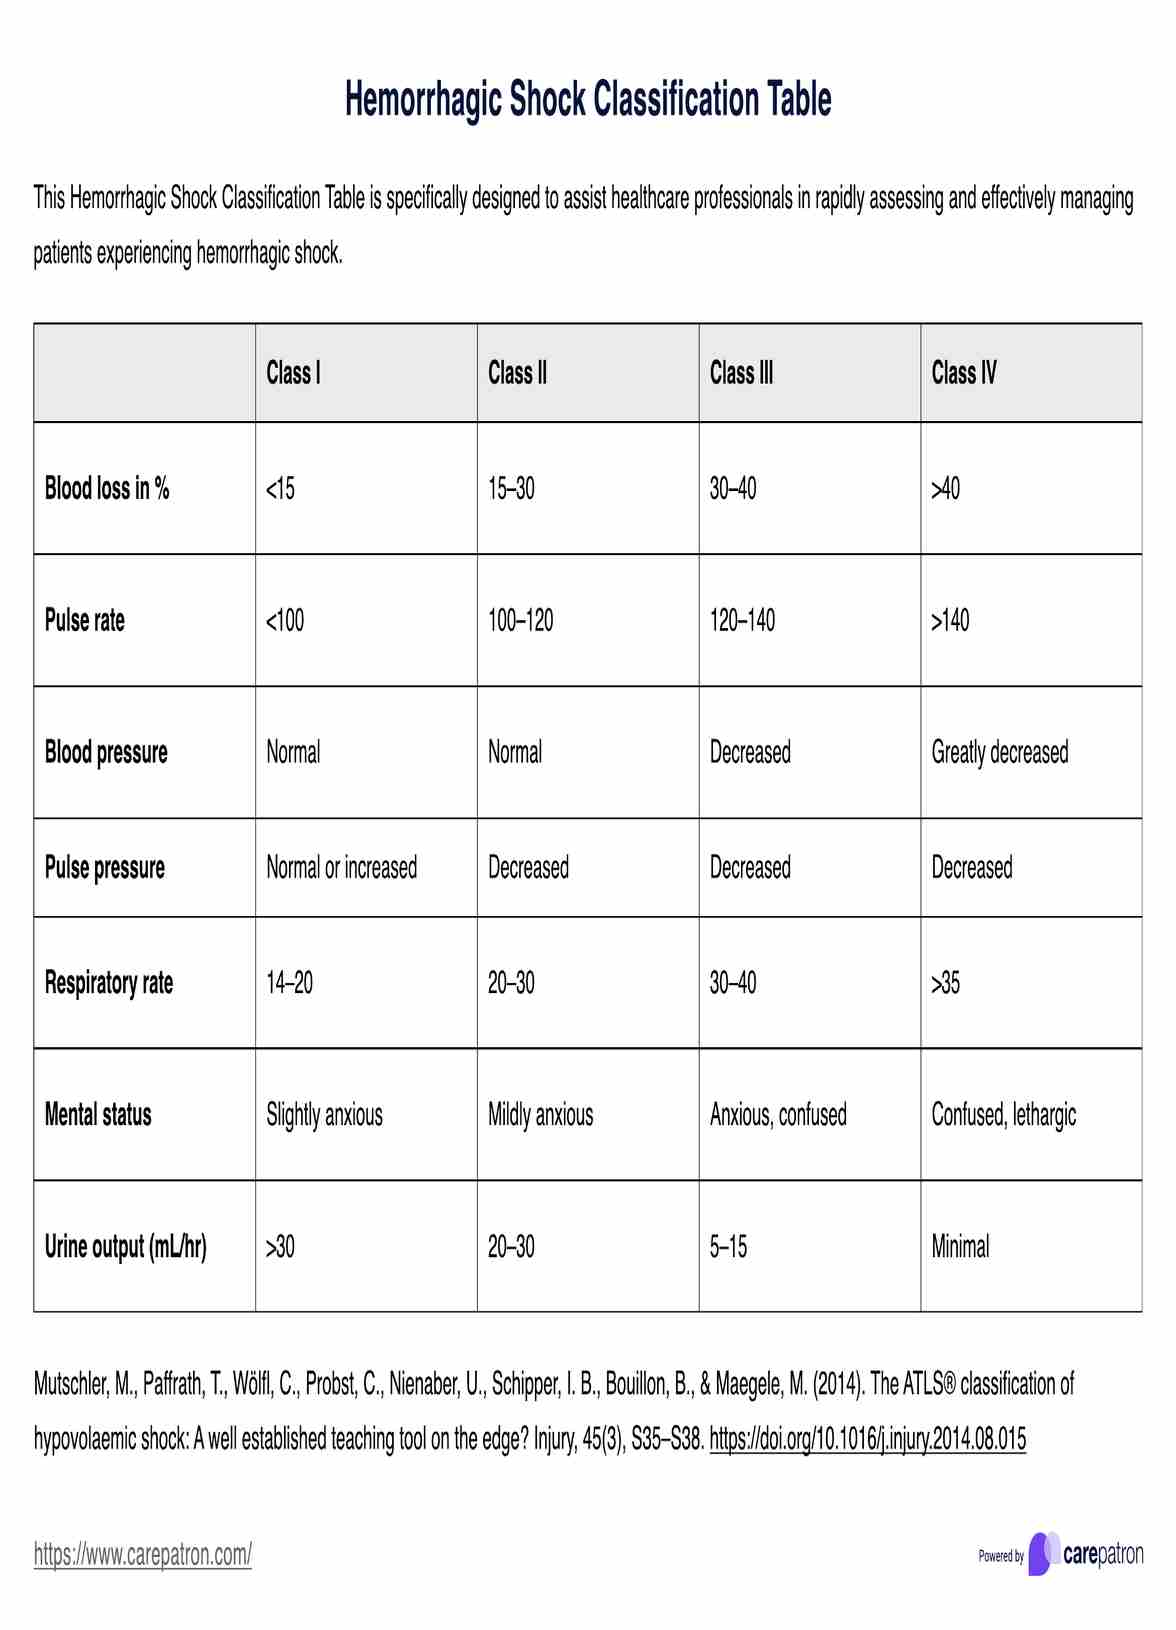 Hemorrhagic Shock Classification Table PDF Example